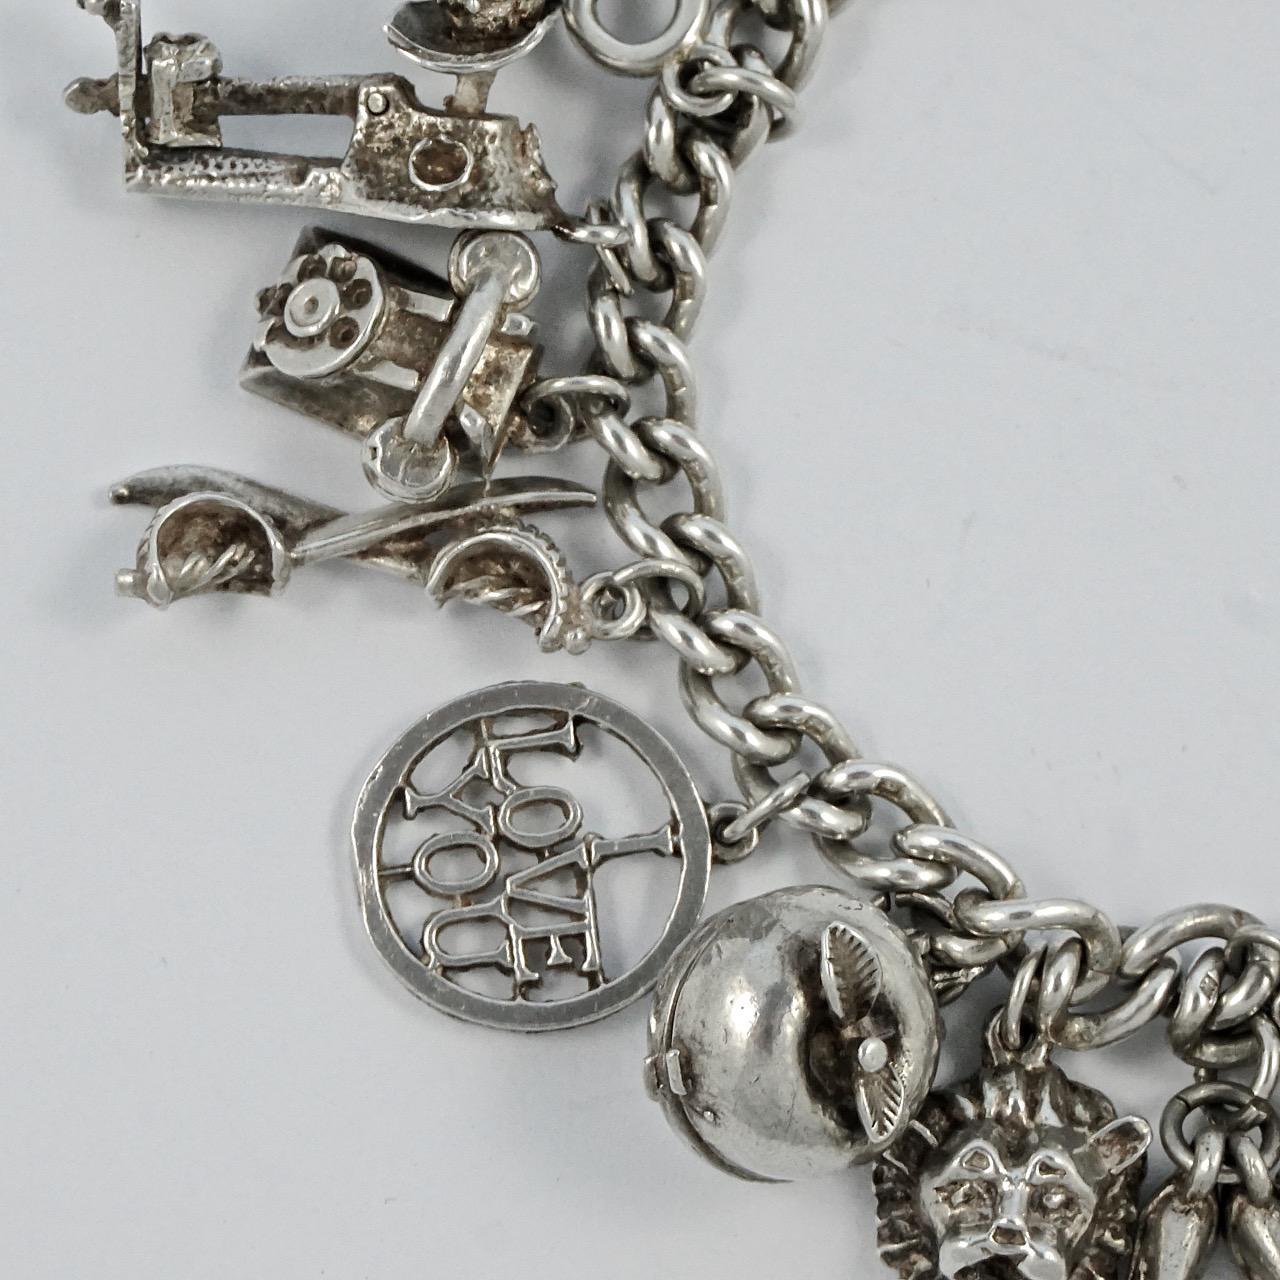 1960s silver charm bracelet